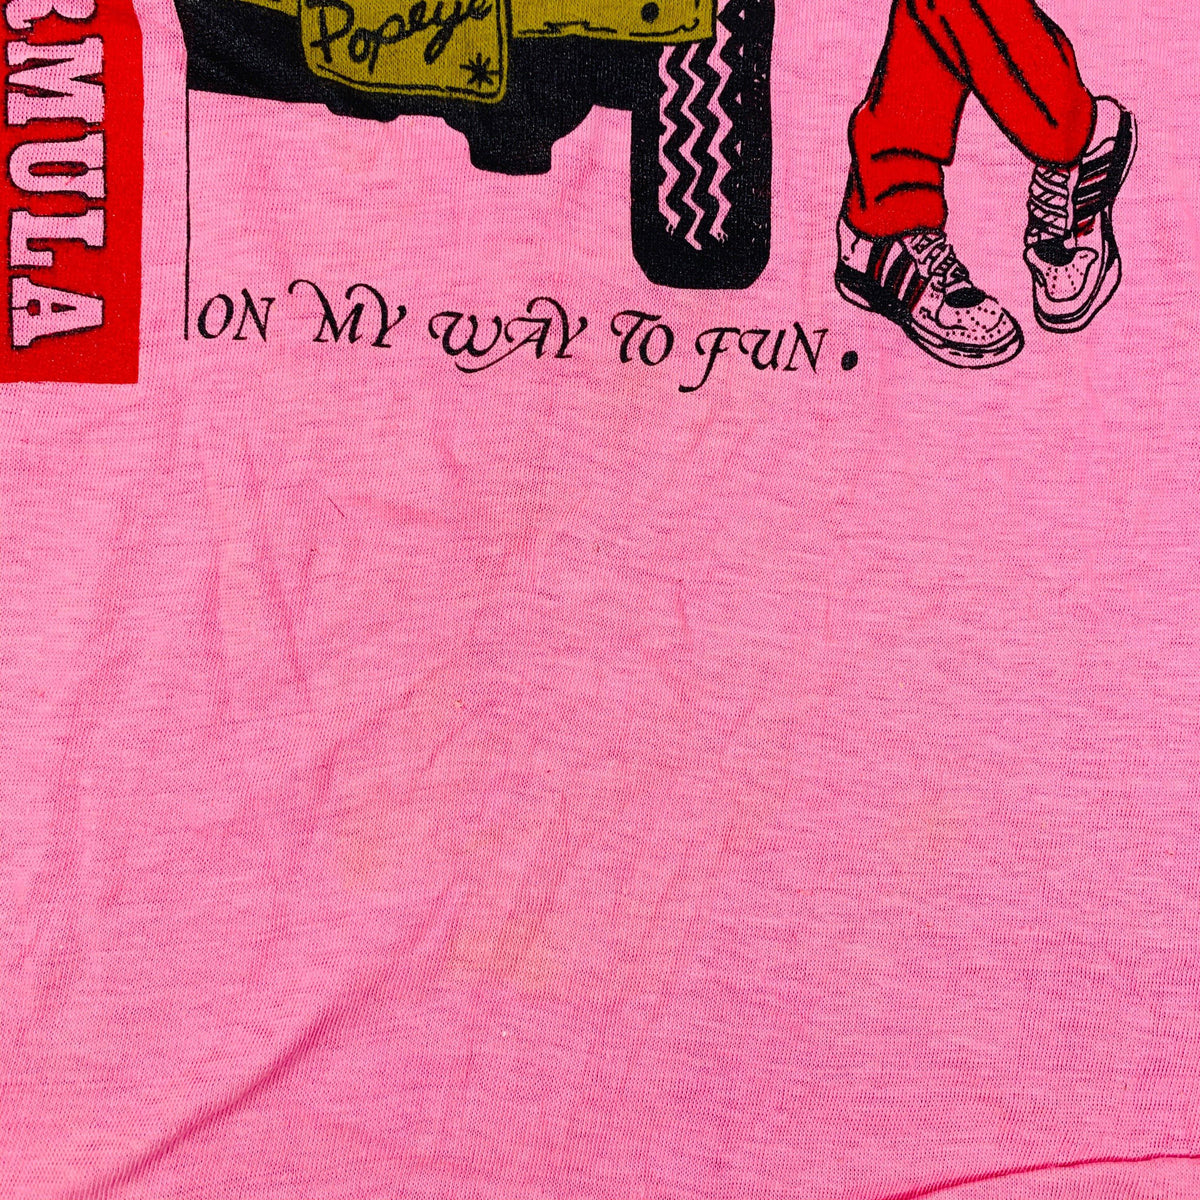 Vintage Mr. Coca Cola &quot;Popeye&quot; T-Shirt - jointcustodydc